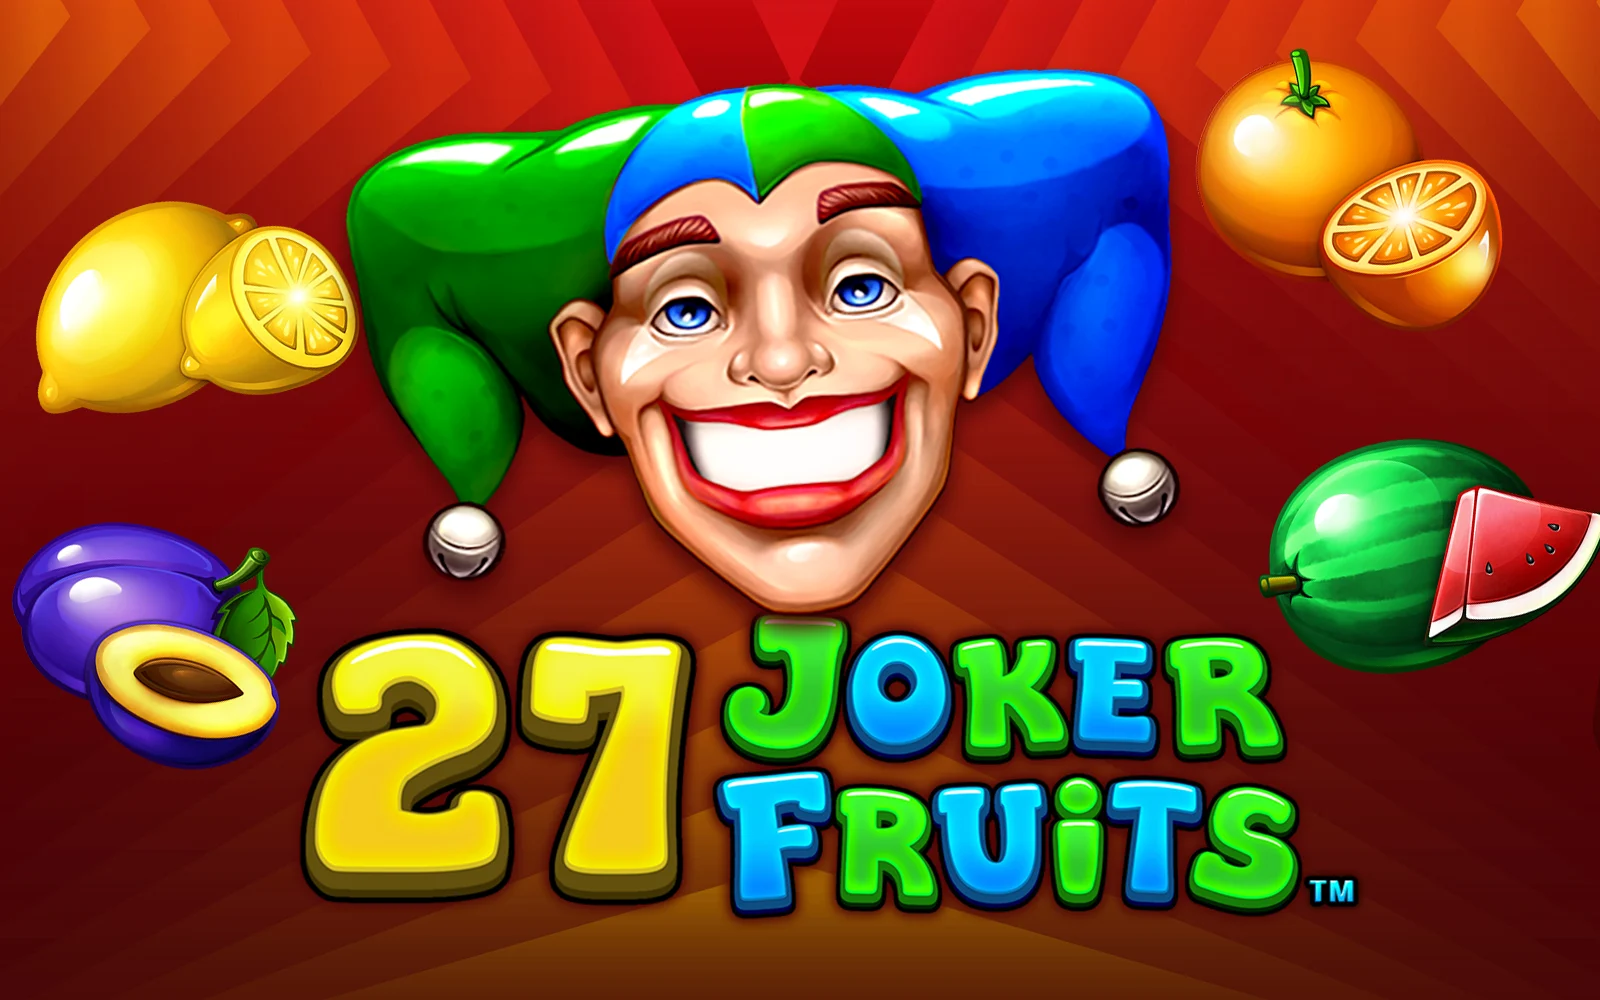 Грайте у 27 Joker Fruits в онлайн-казино Starcasino.be